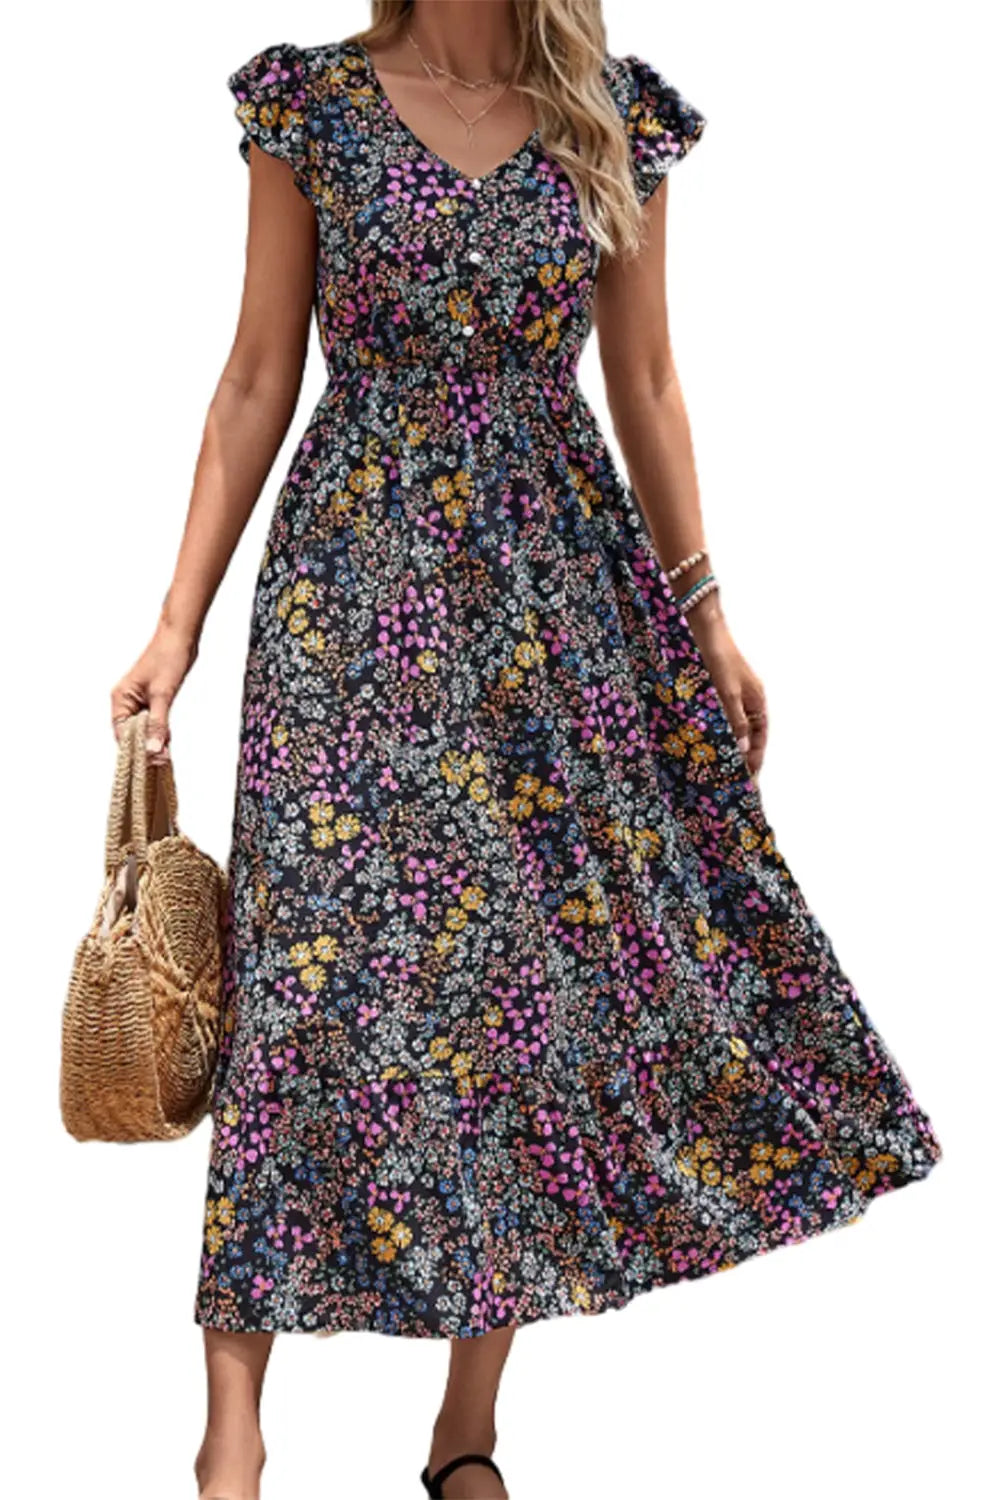 Black floral ruffled sleeve v neck buttoned midi dress - dresses/floral dresses